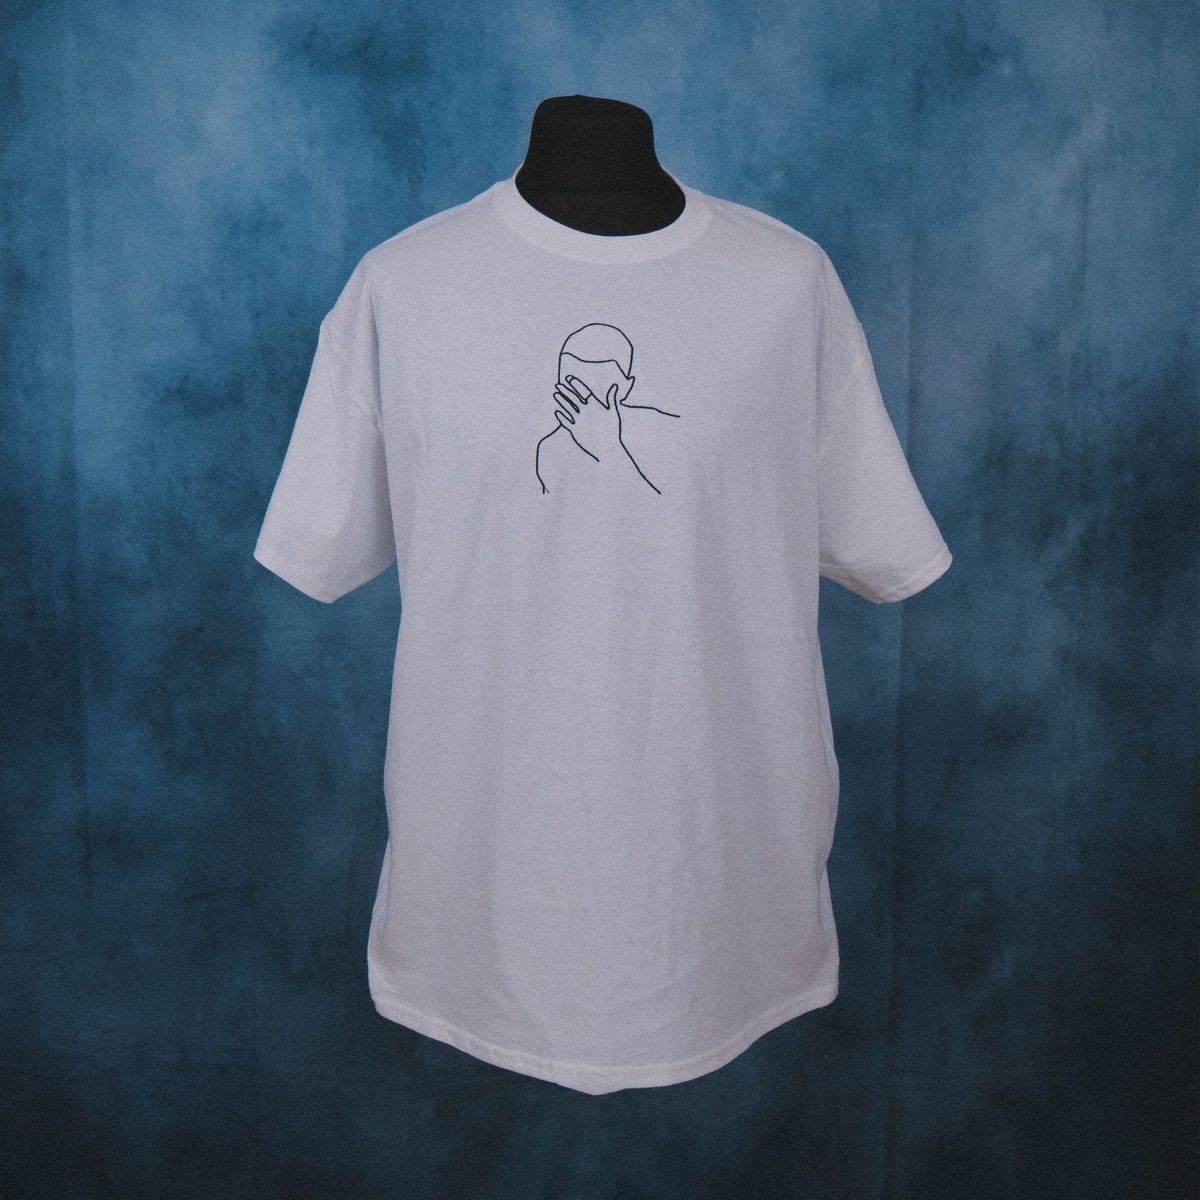 Frank Ocean - Blonde Cover Art Outline Unisex Embroidered T-Shirt